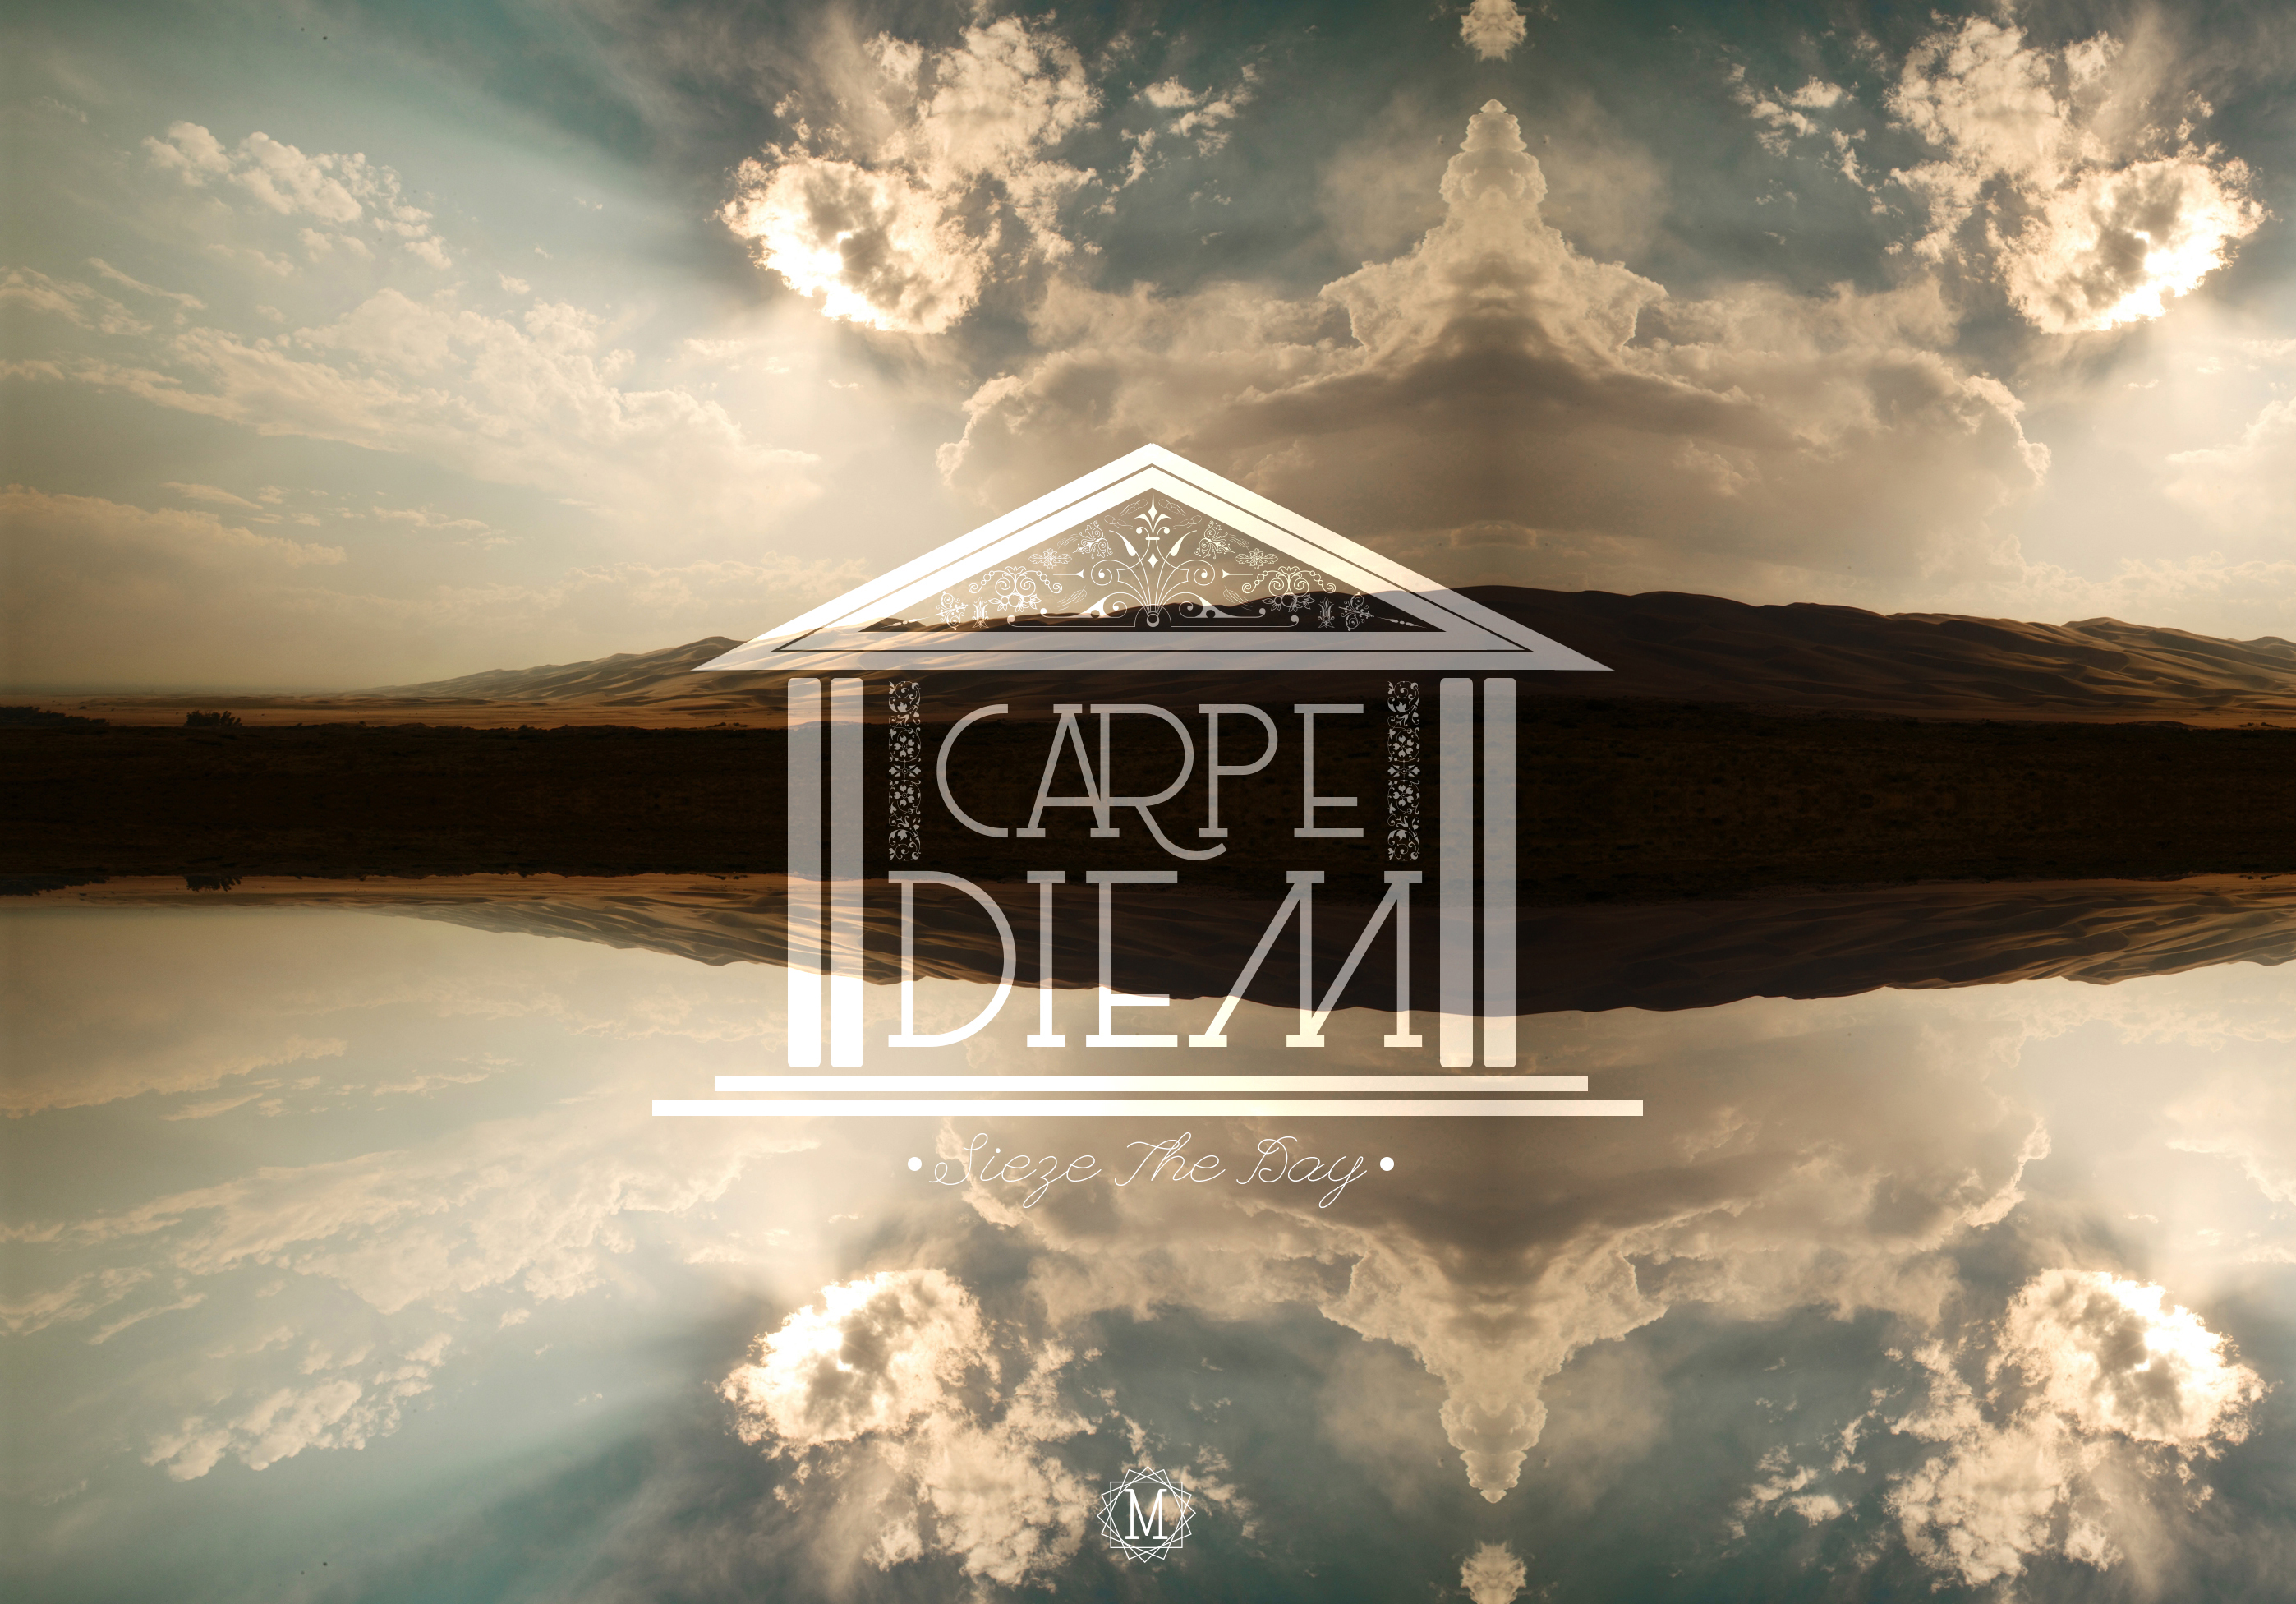 Carpe Diem!  Check Out This Blog!